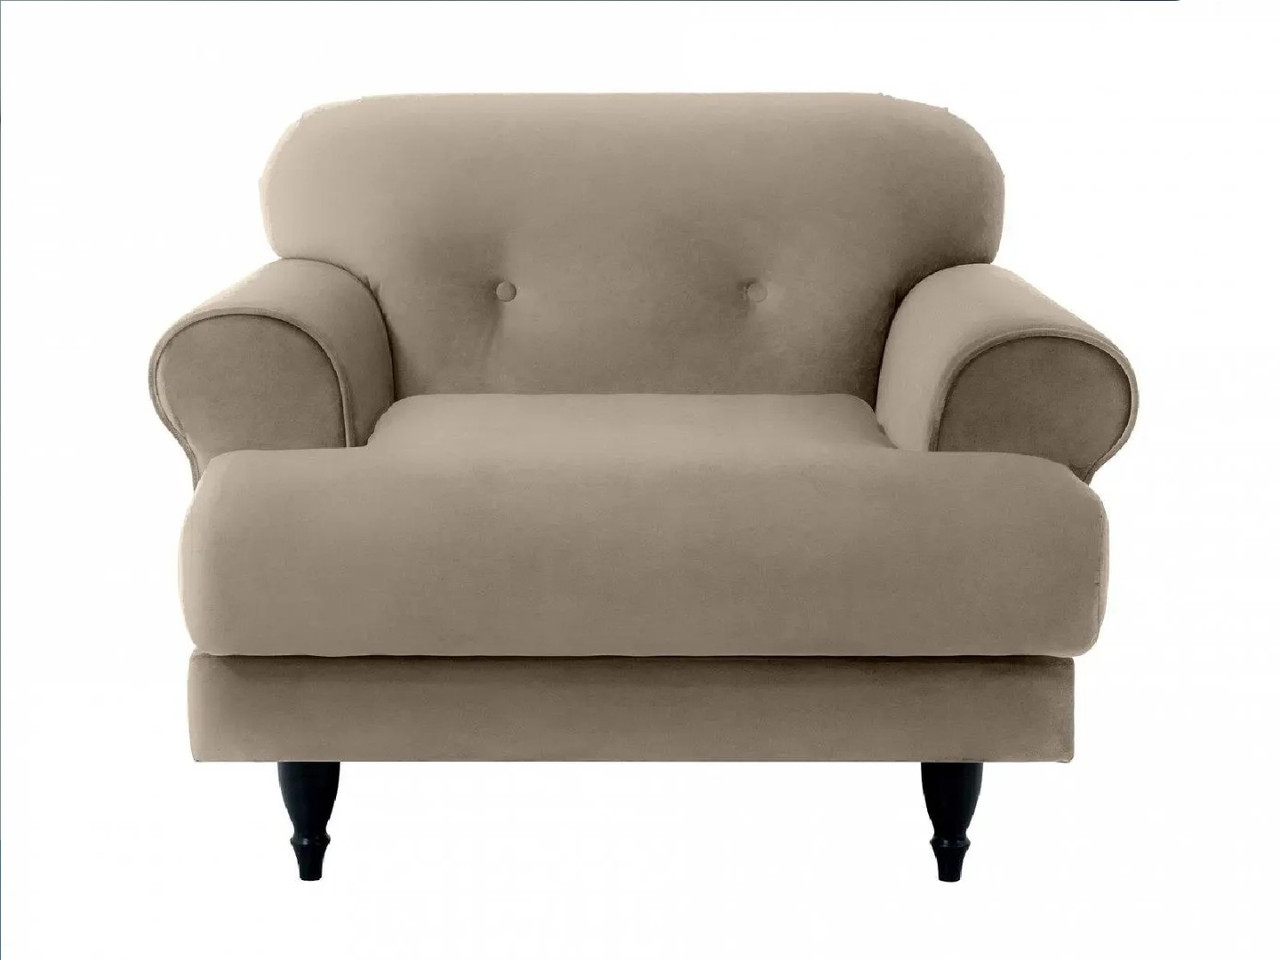 Hoffmann классическое кресло, обивка велюр Italia beige